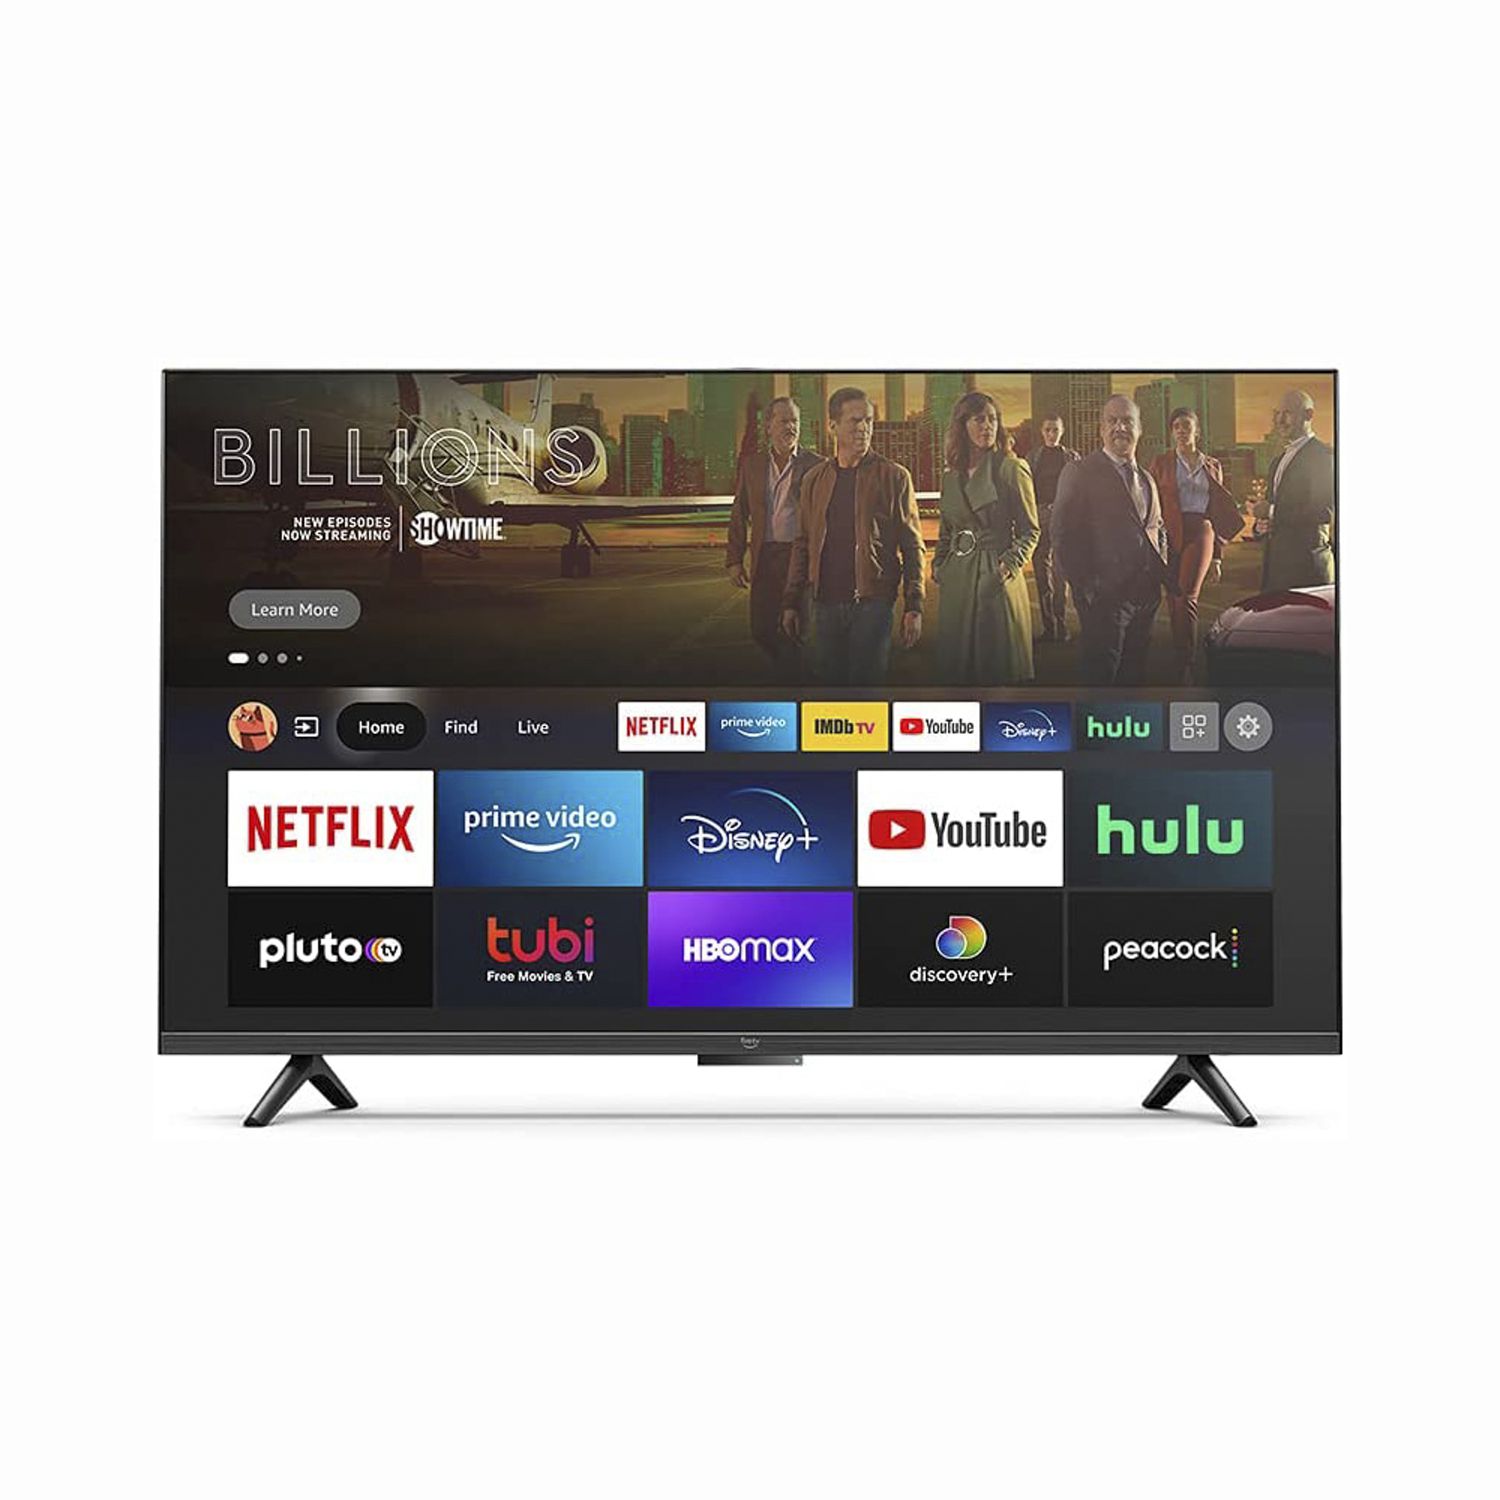 The 40 best affordable under-$500 TV deals for Black 2021 | EW.com